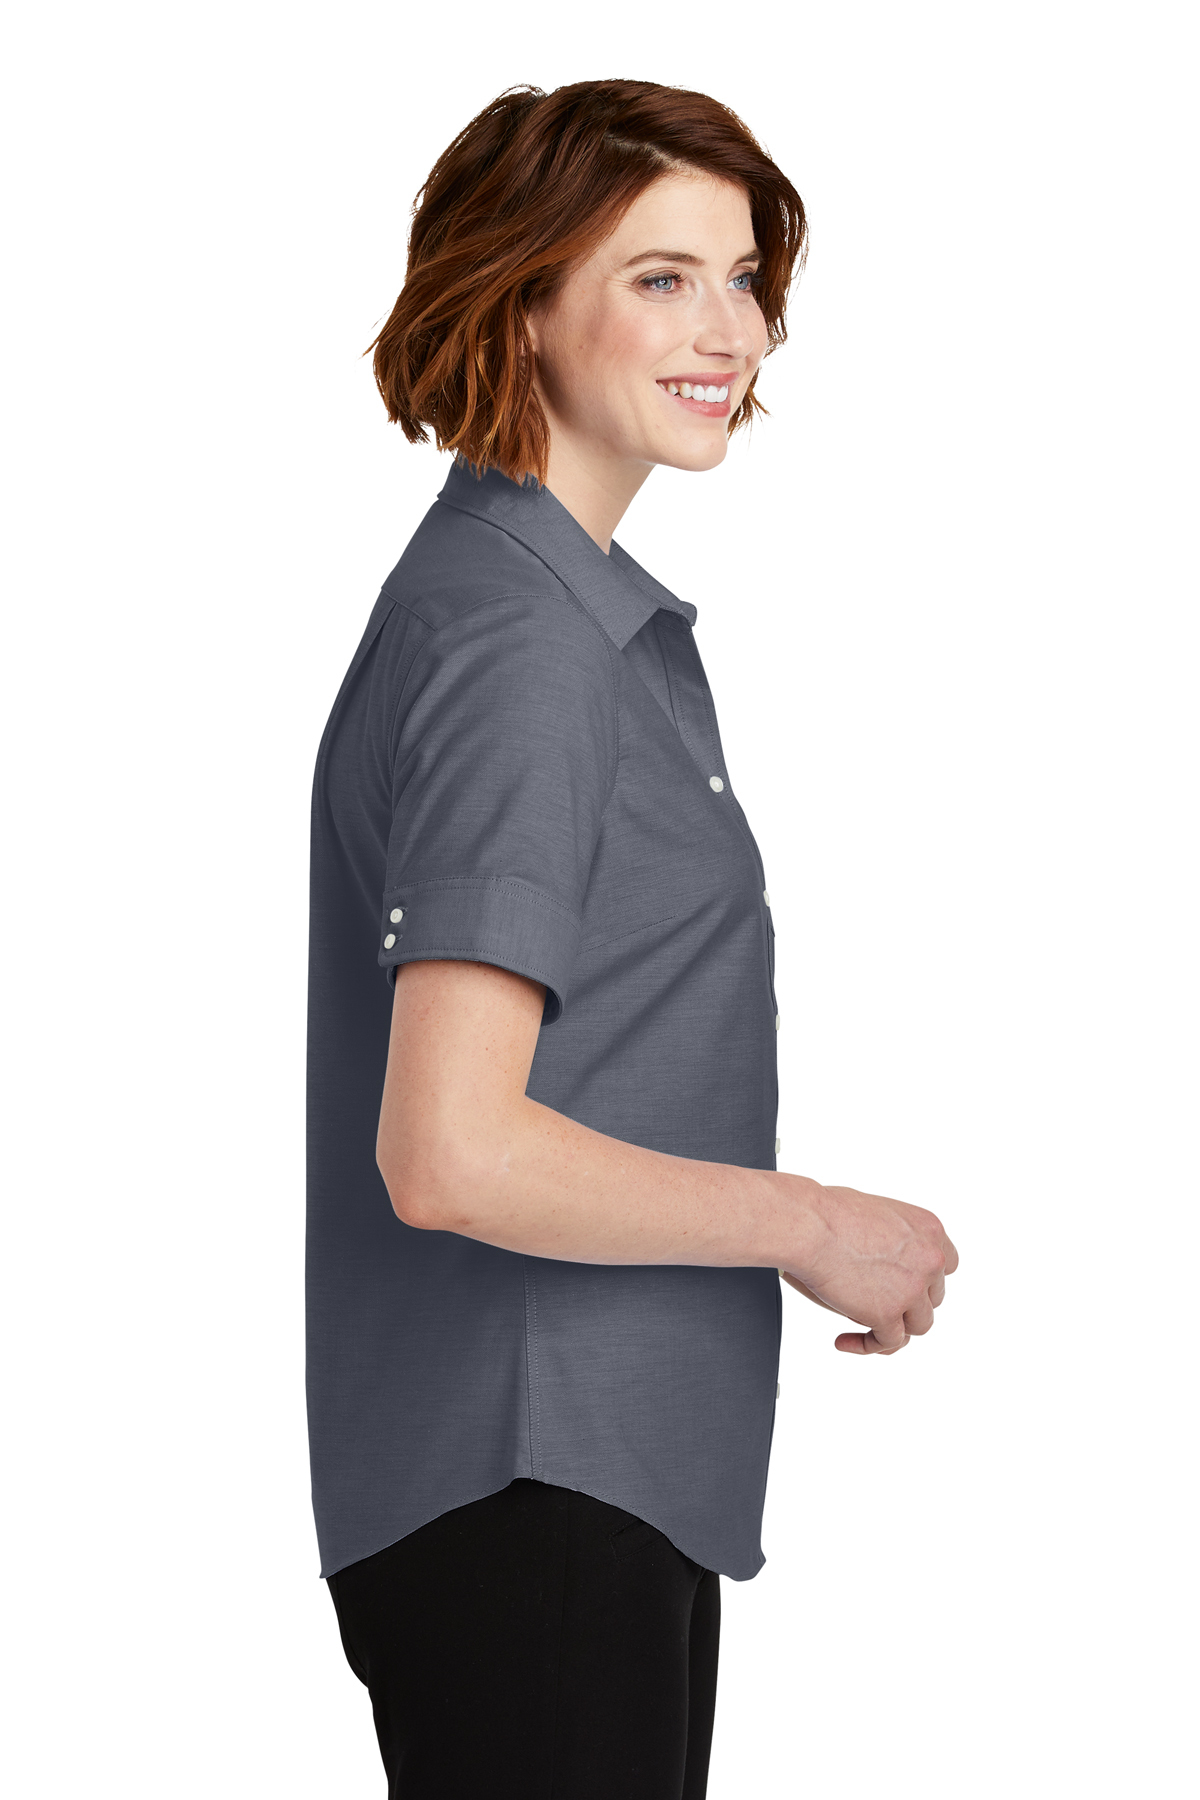 Port Authority ® Ladies Short Sleeve SuperPro ™ Oxford Shirt | Product ...